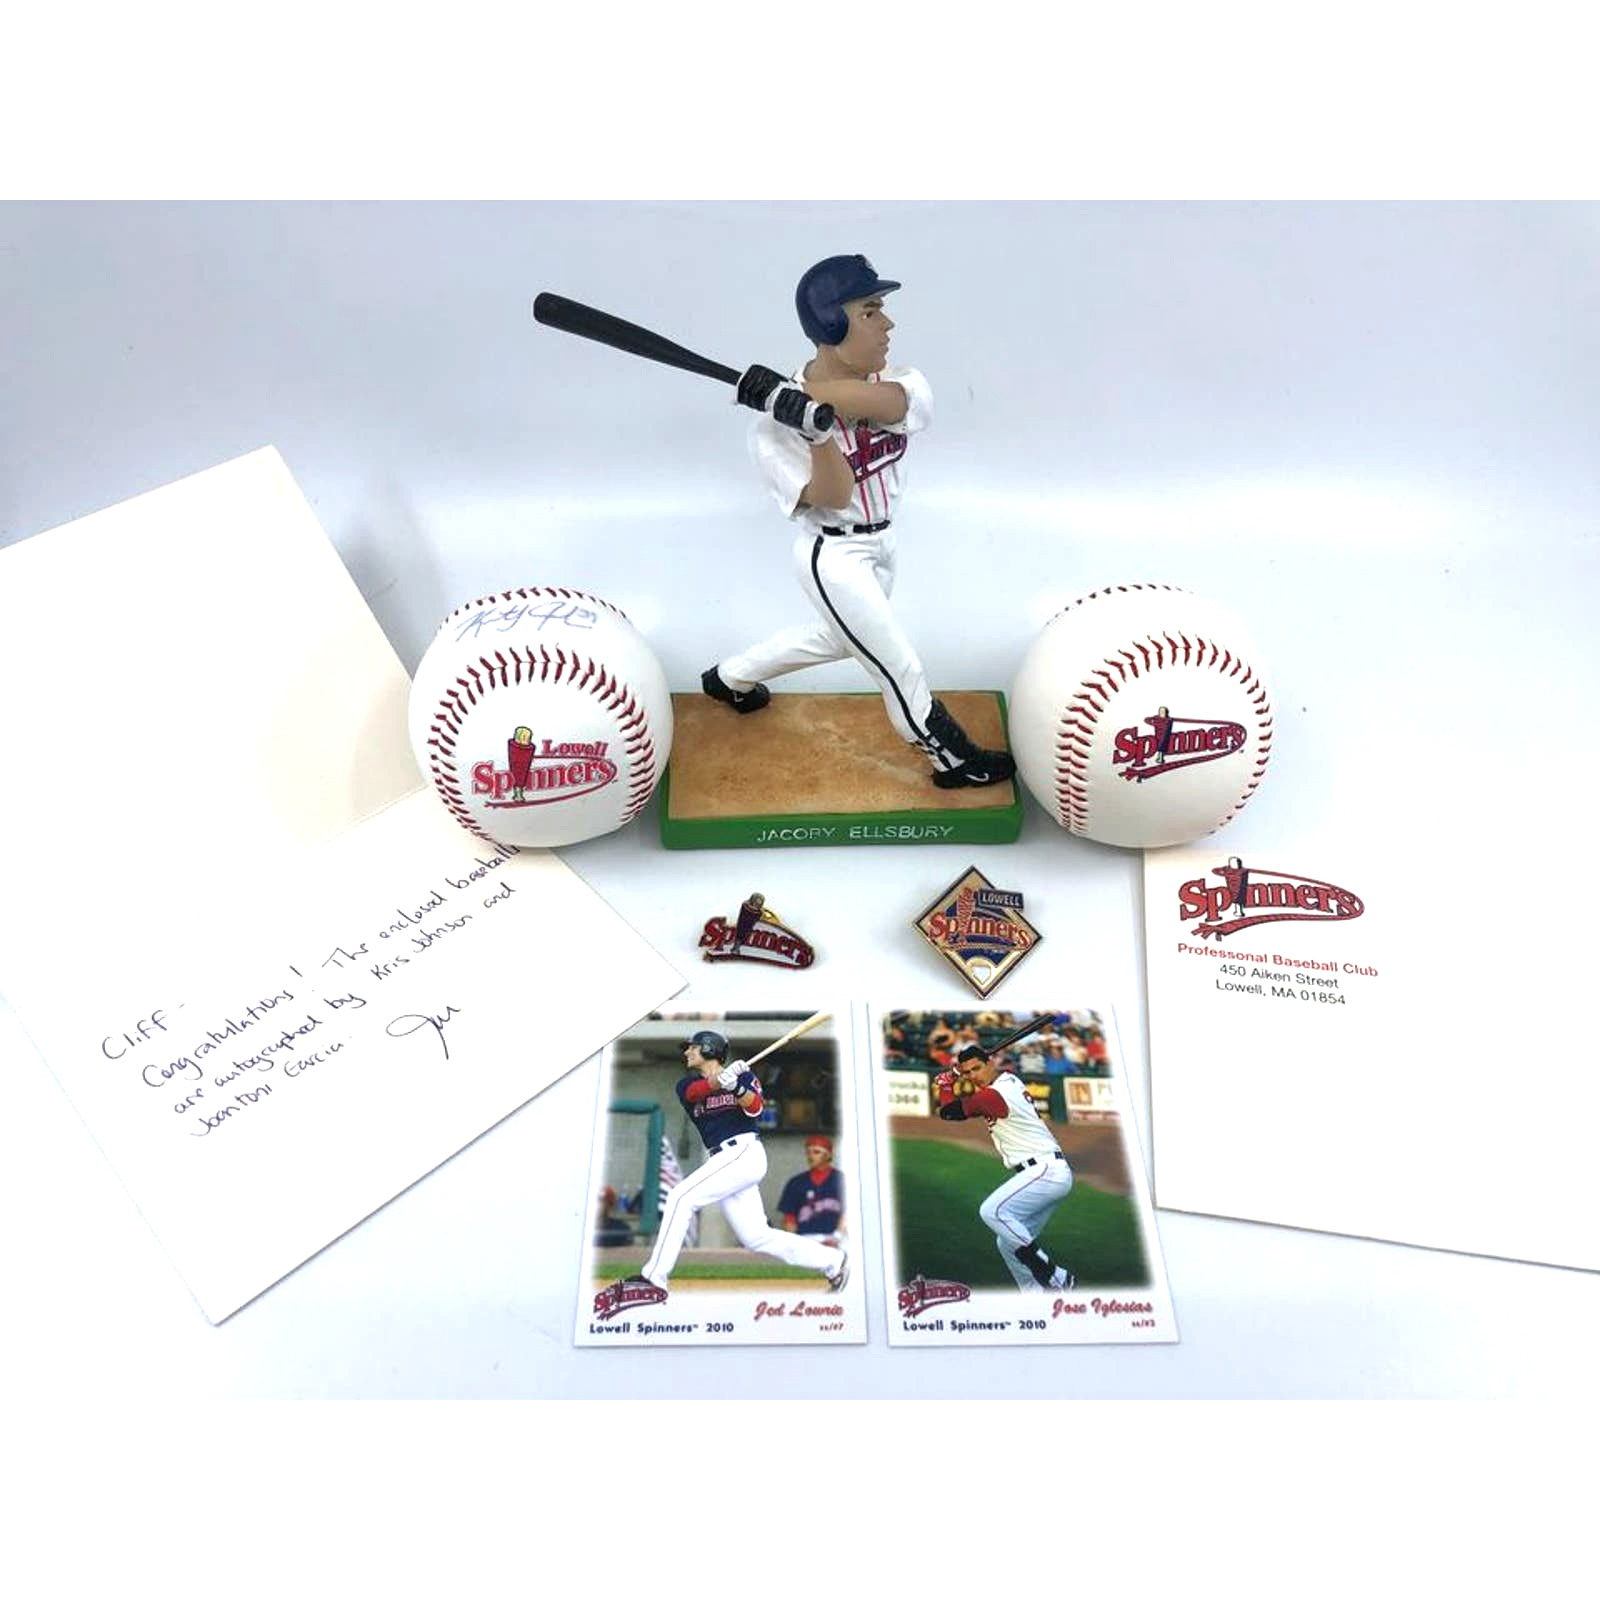 Lowell Spinners Signed Baseballs, Pins, Jacoby Ellsbury Figure & Memorabilia